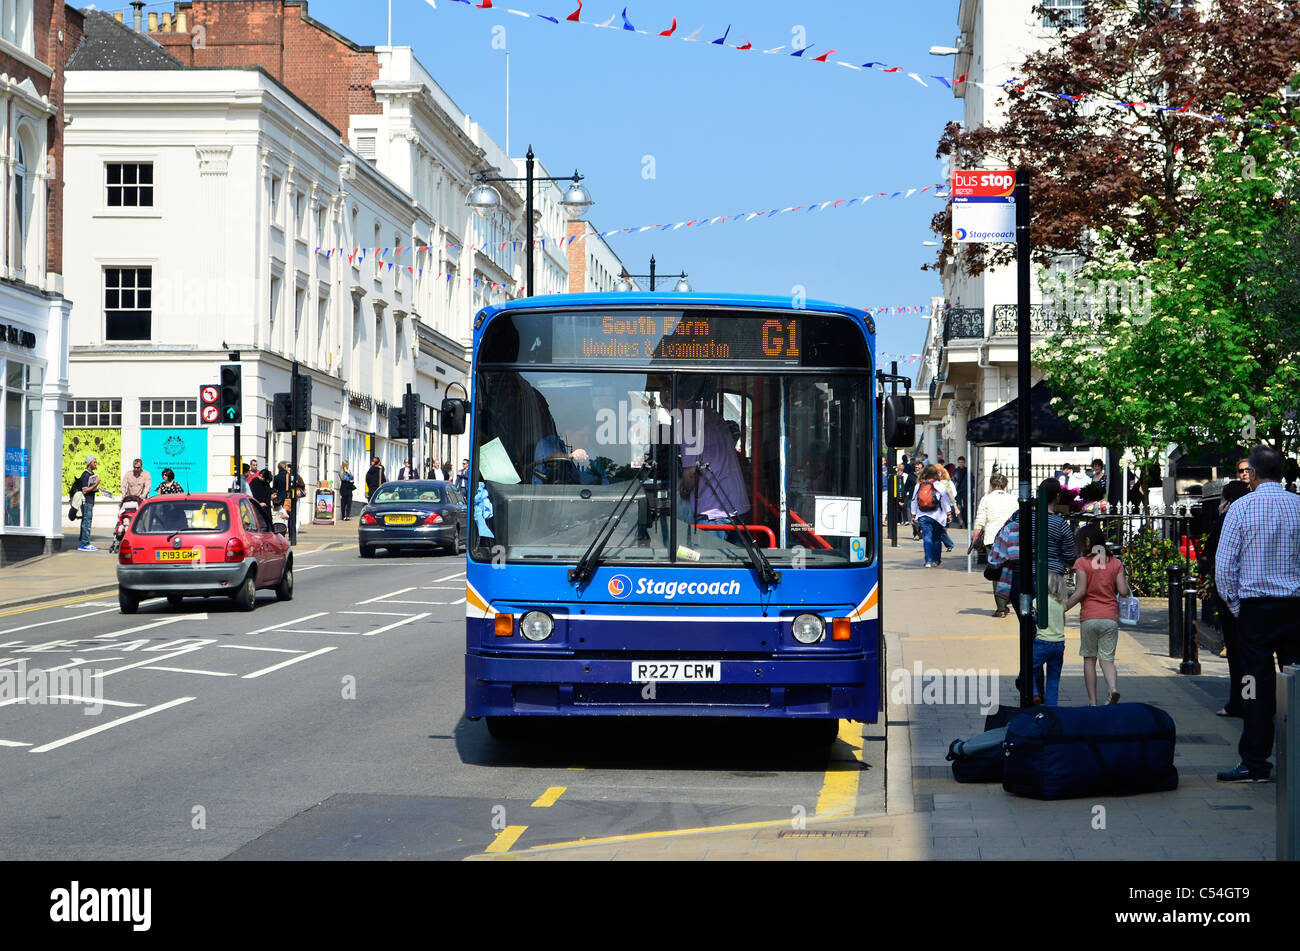 Bus stop, Parade, Leamington Spa, Warwickshire, UK. Local transport Stagecoach bus taking on passengers. Stock Photo